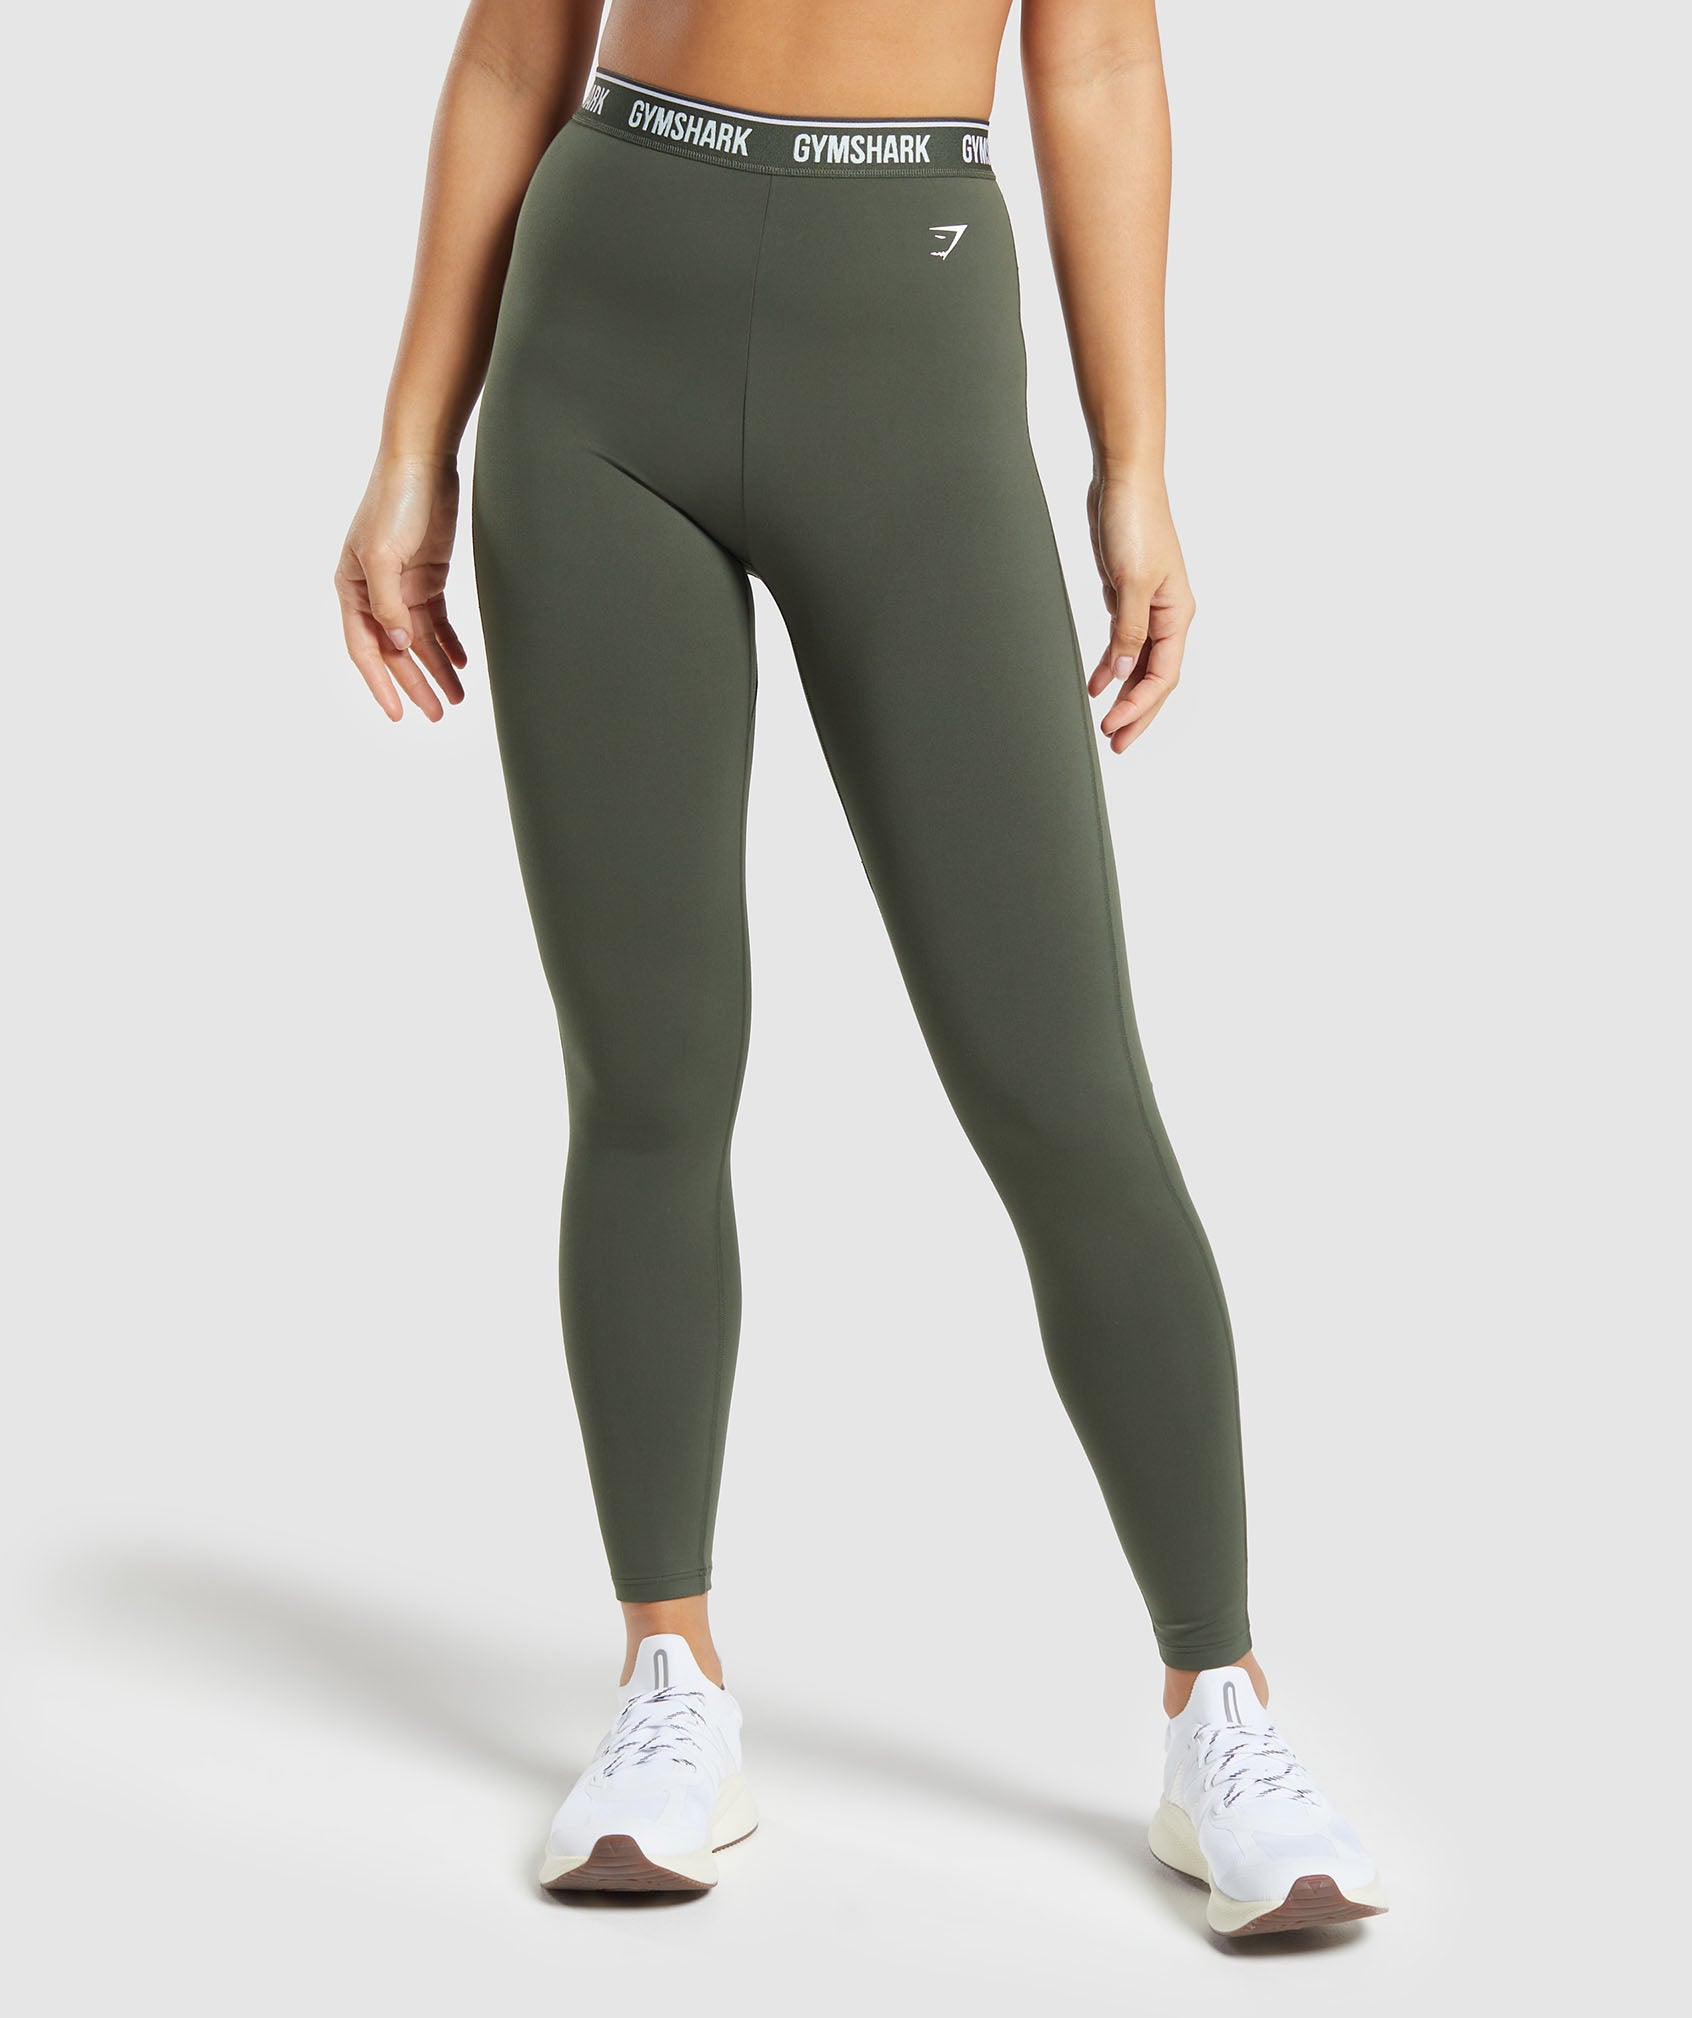 Savvi Fit Olive Green Dancer Leggings Size XL New Retail $59